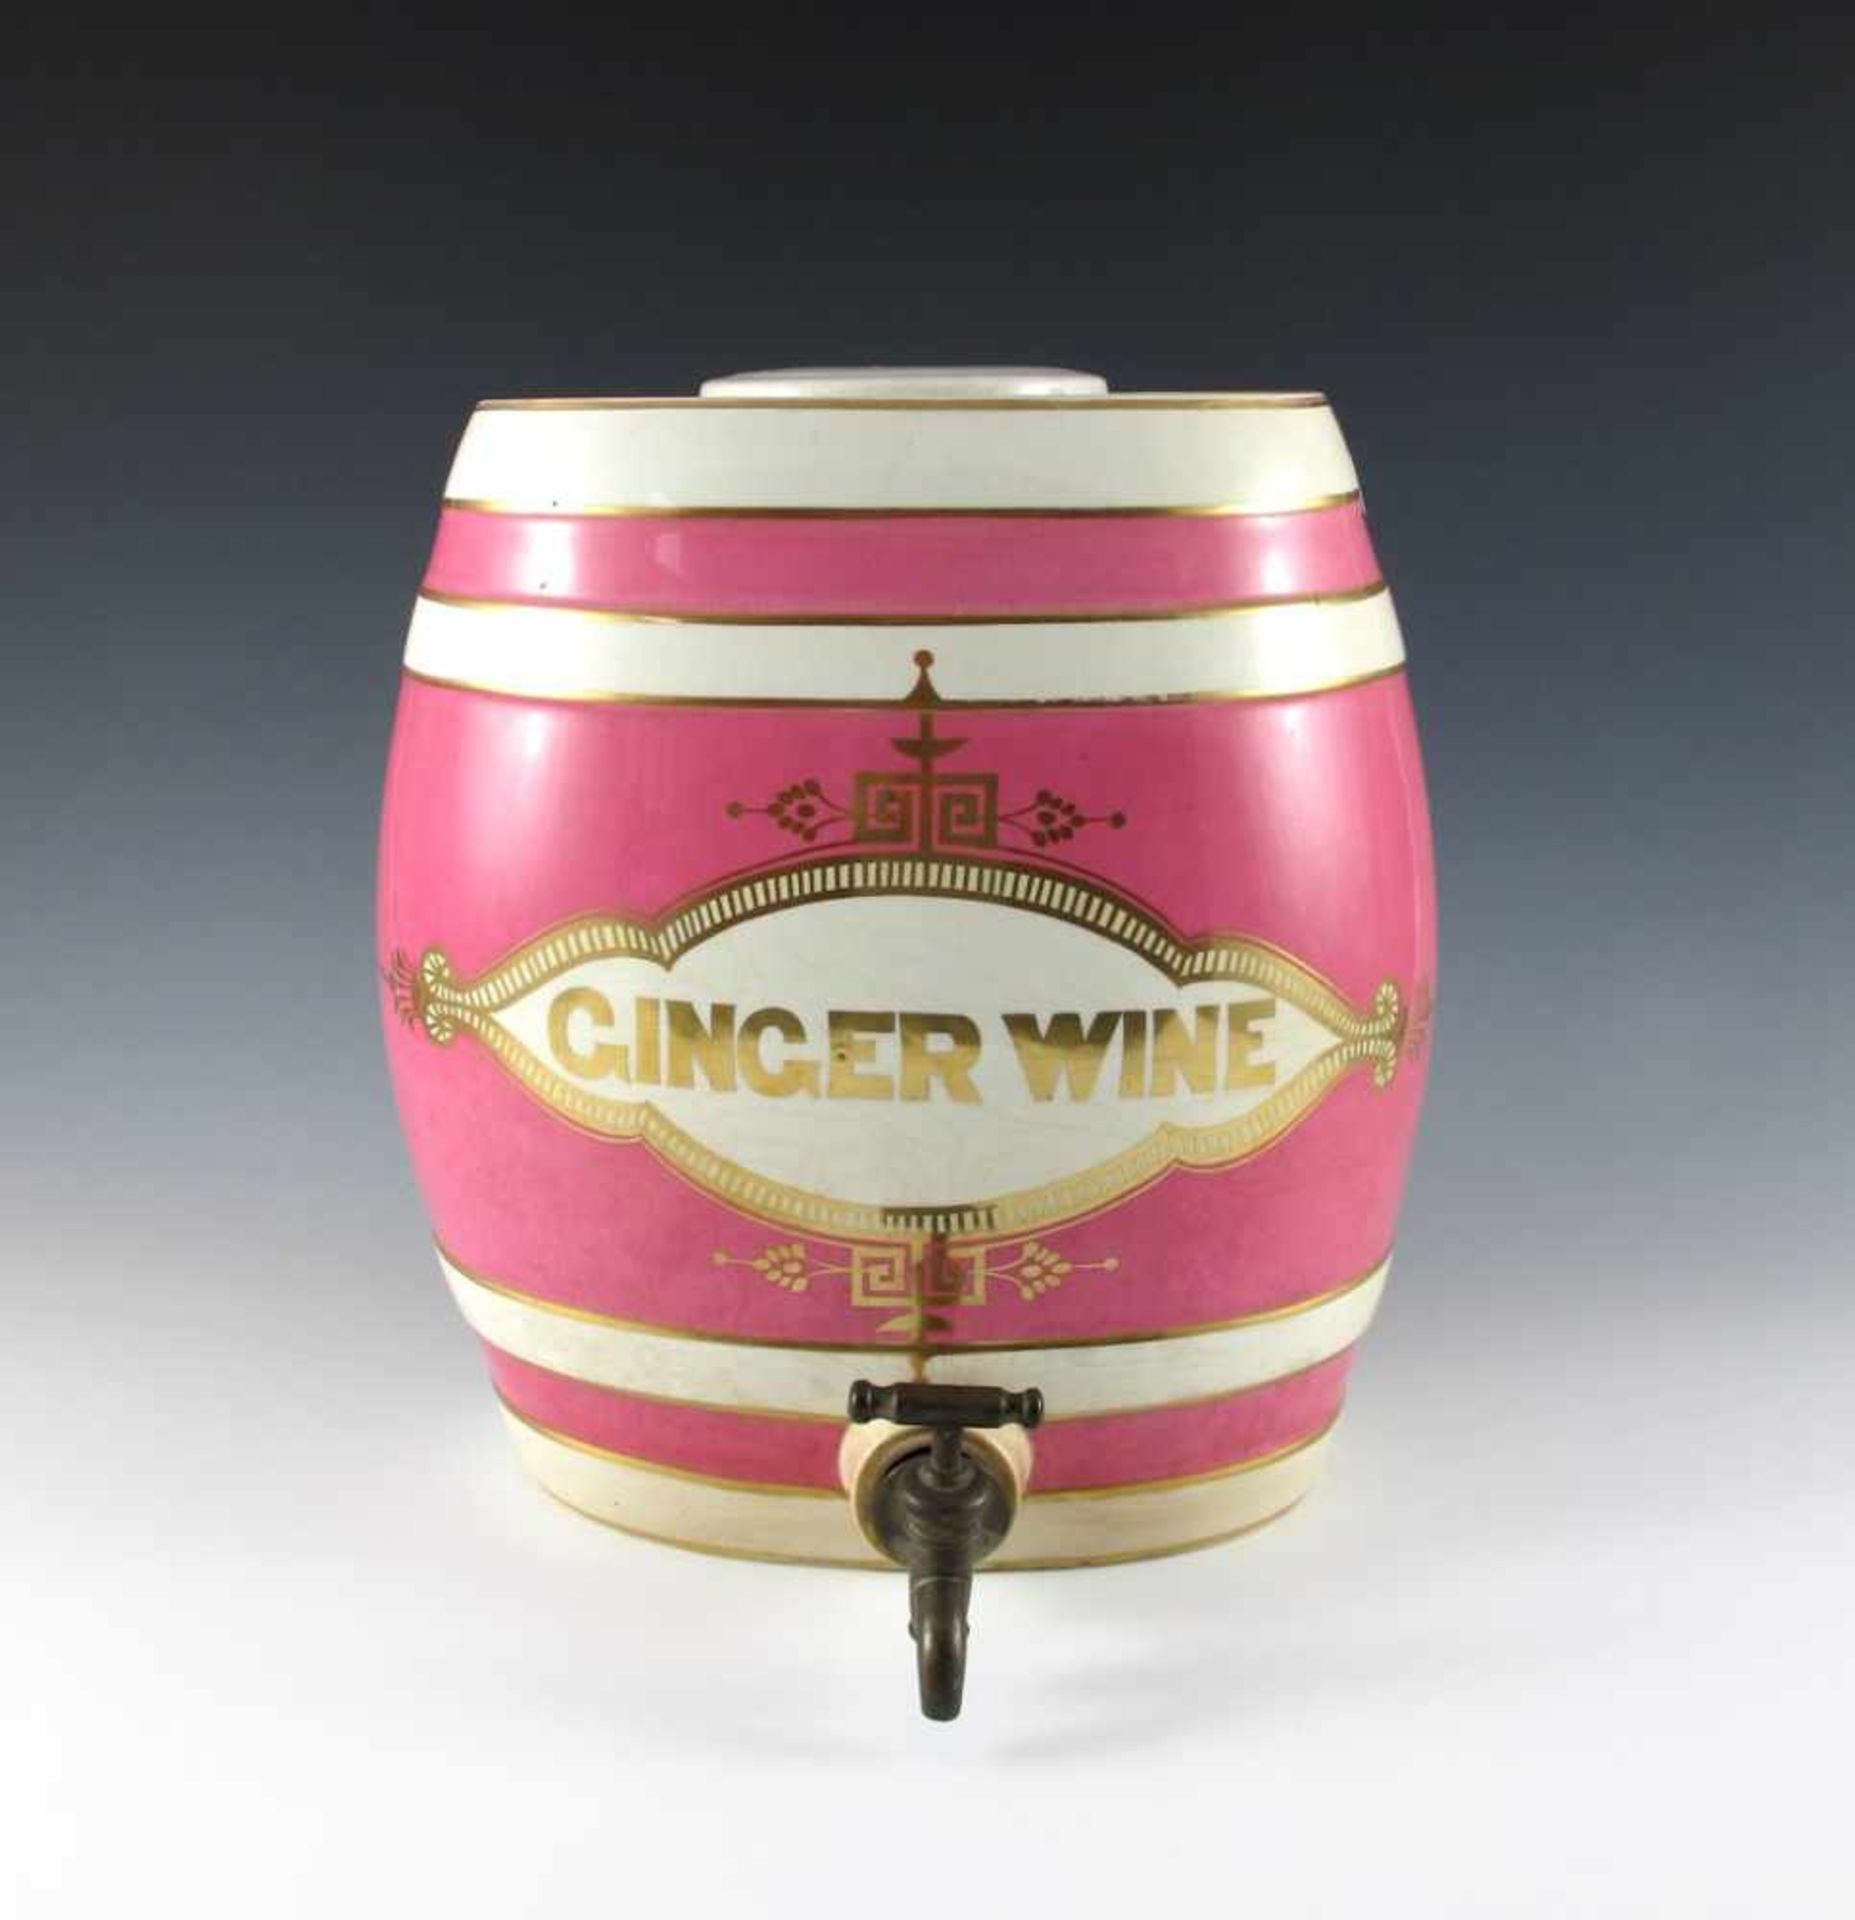 Porzellanfass "Ginger Wine". Himbeerfarben und golden staffiert. Messinghahn. England, 19. Jh. H